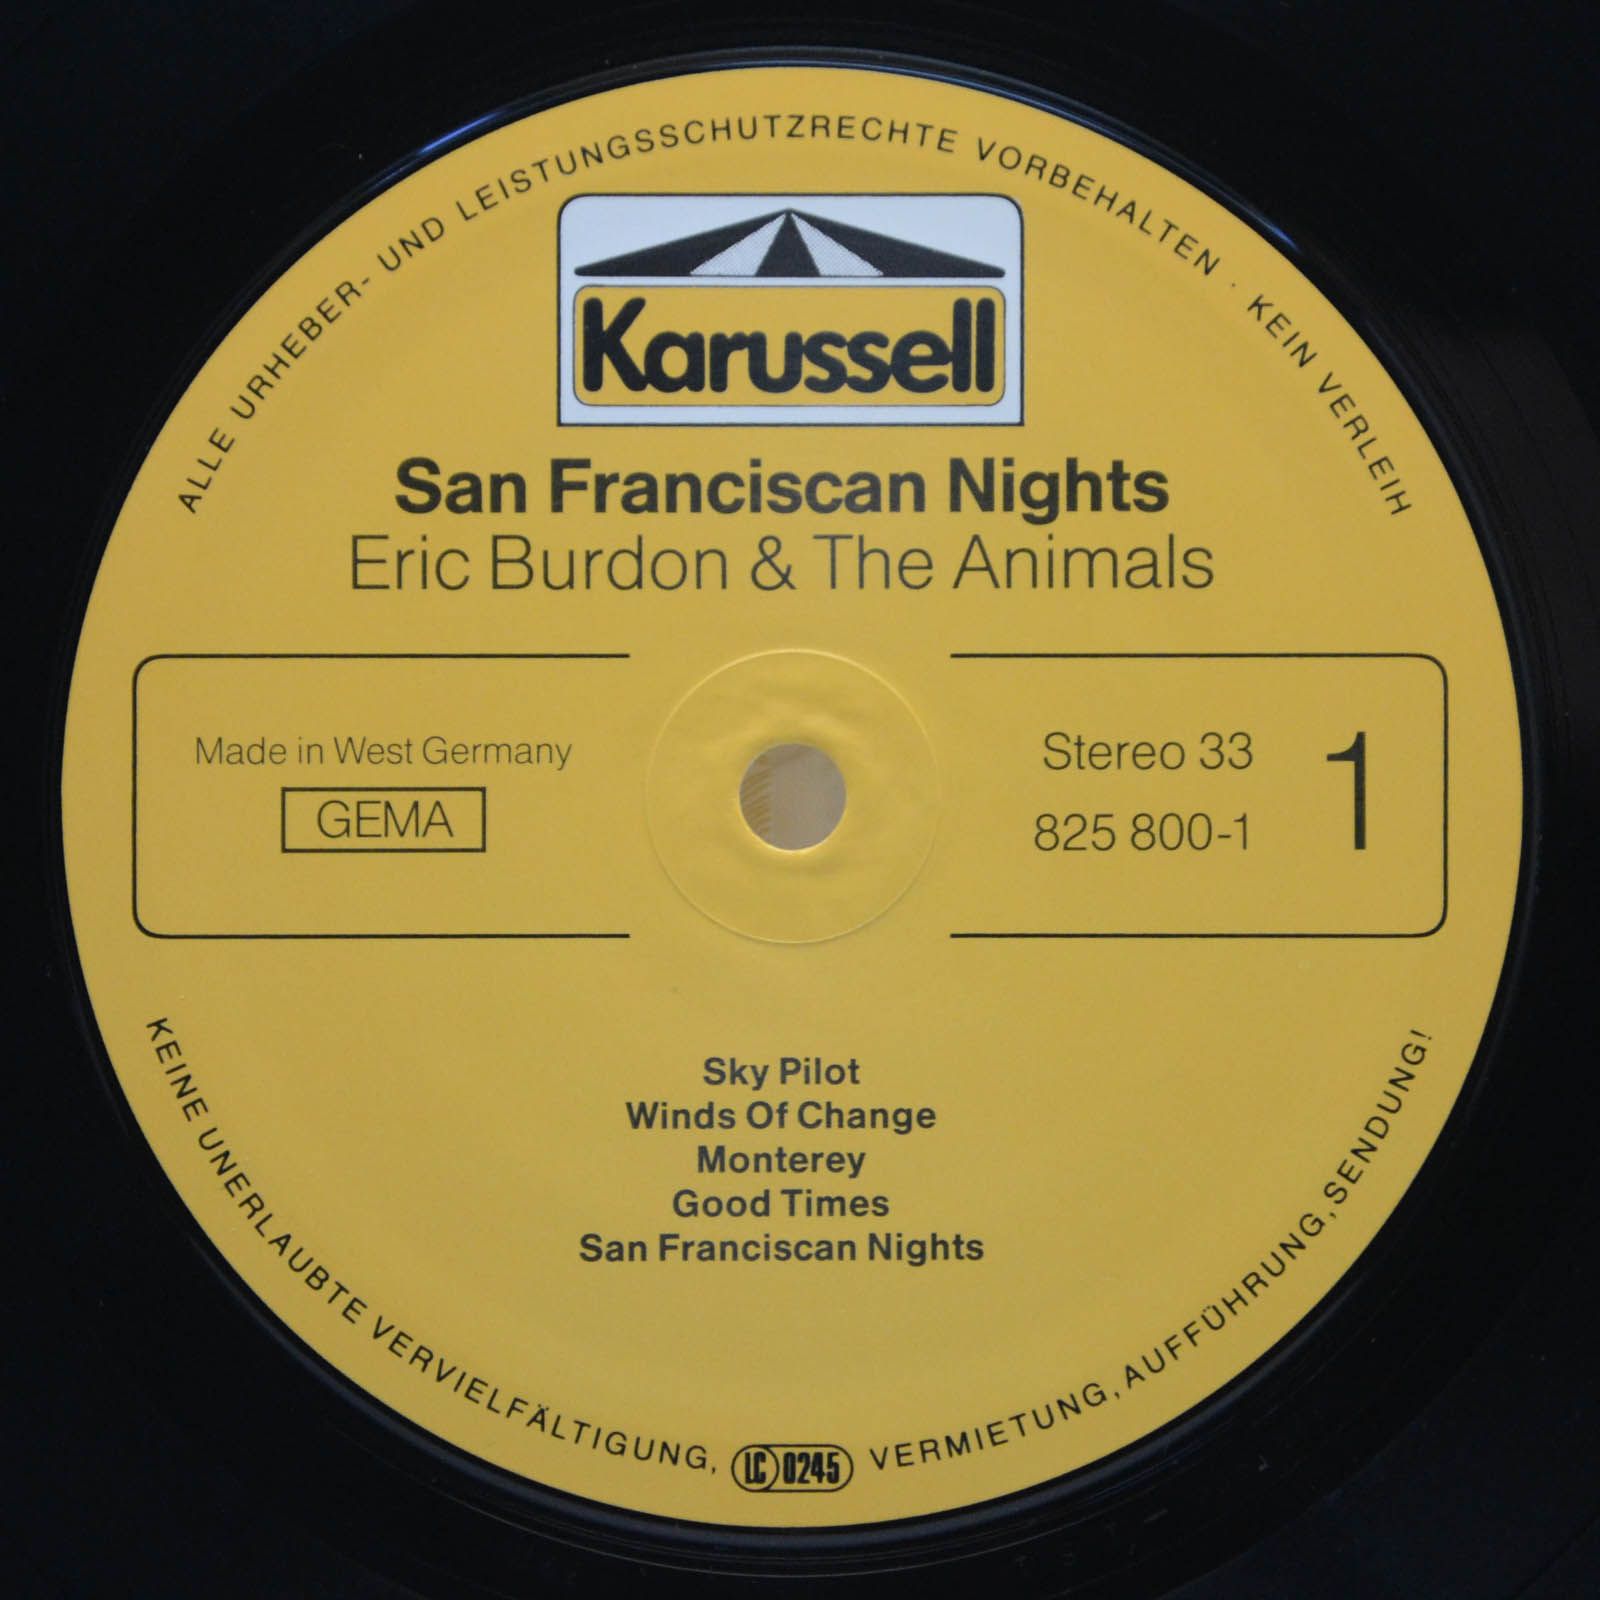 Eric Burdon & The Animals — San Franciscan Nights, 1978